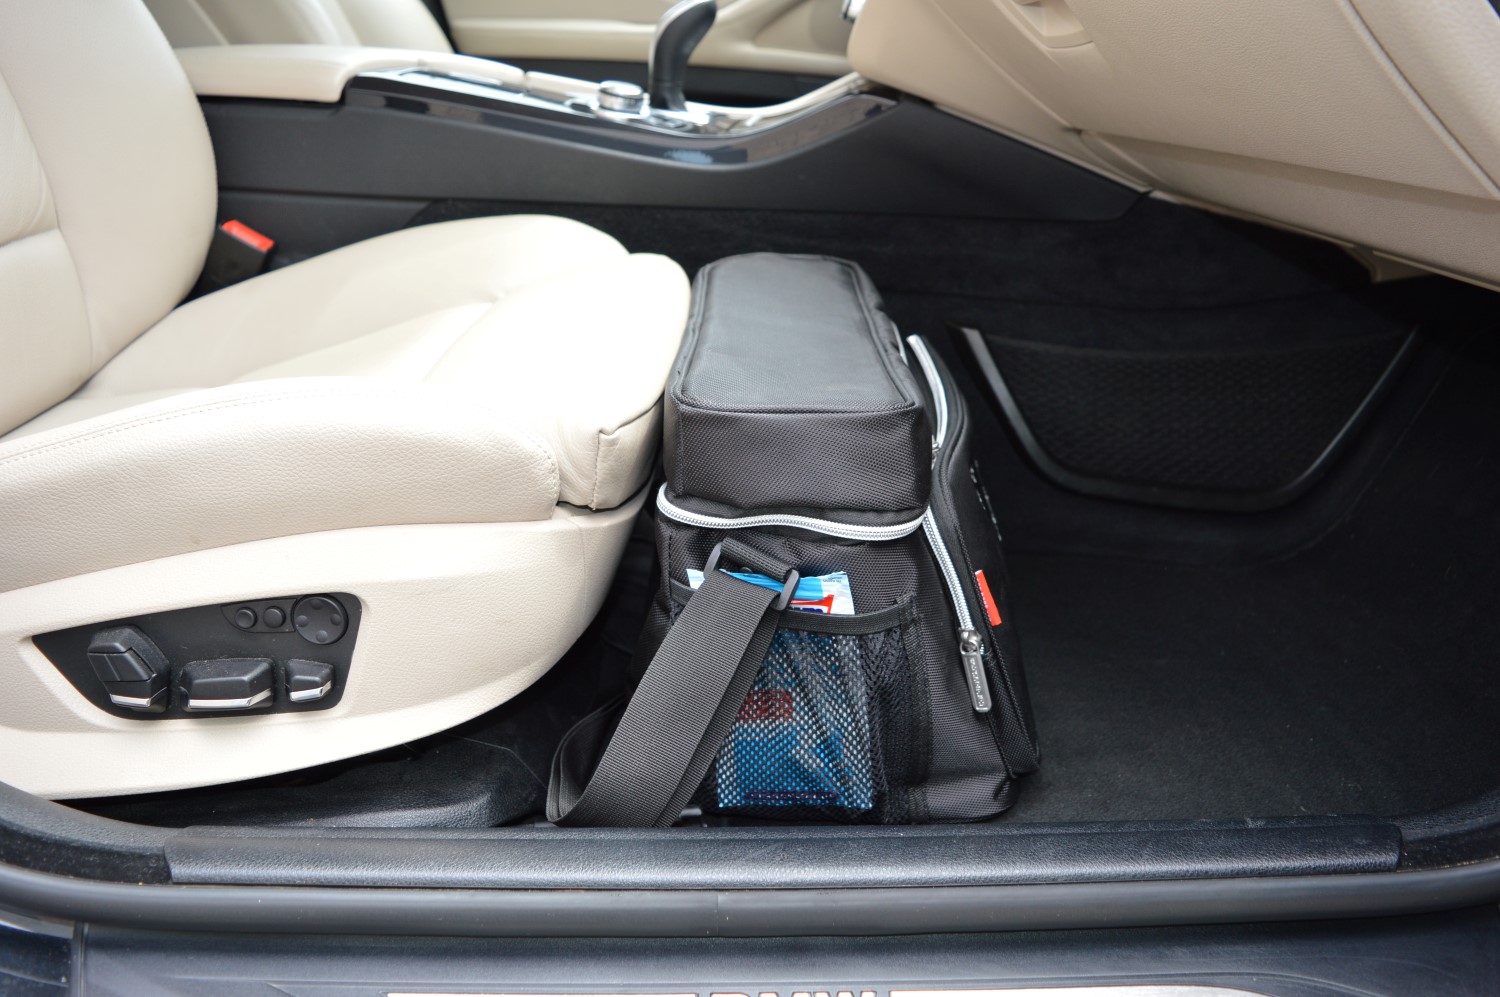 https://www.car-bags.com/images/stories/virtuemart/product/coolbag-car-bags-5.jpg